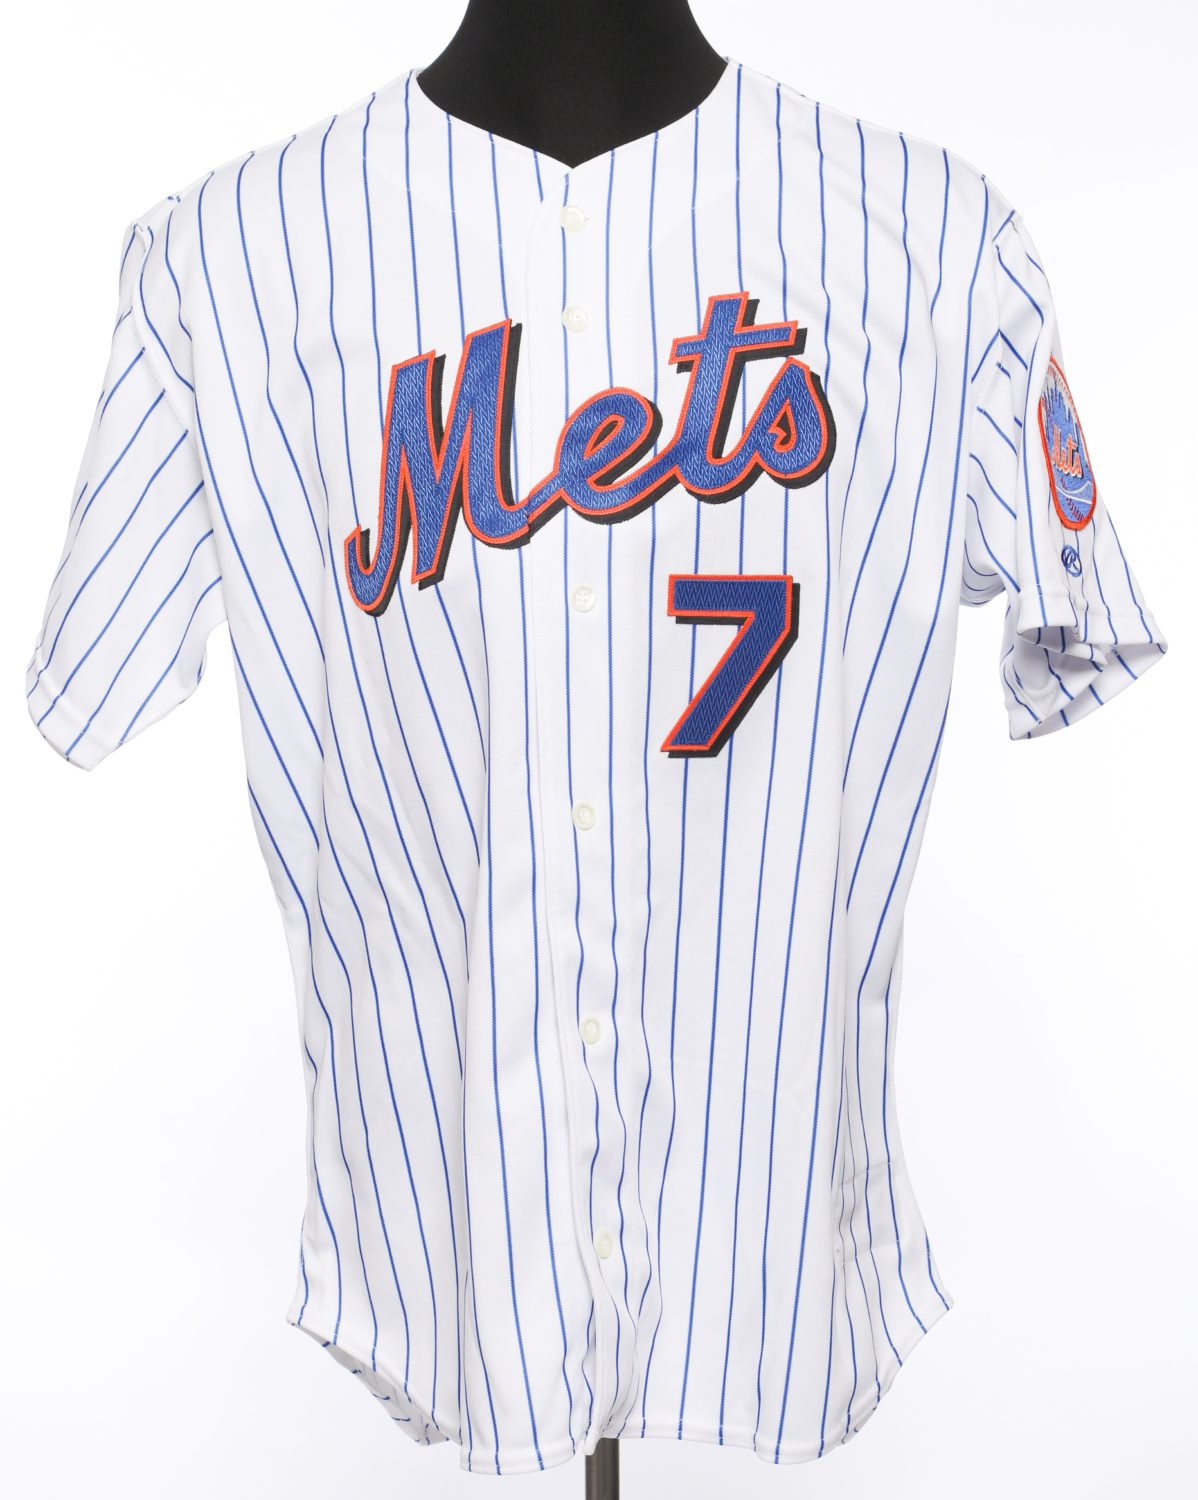 Todd Pratt New York Mets Jersey